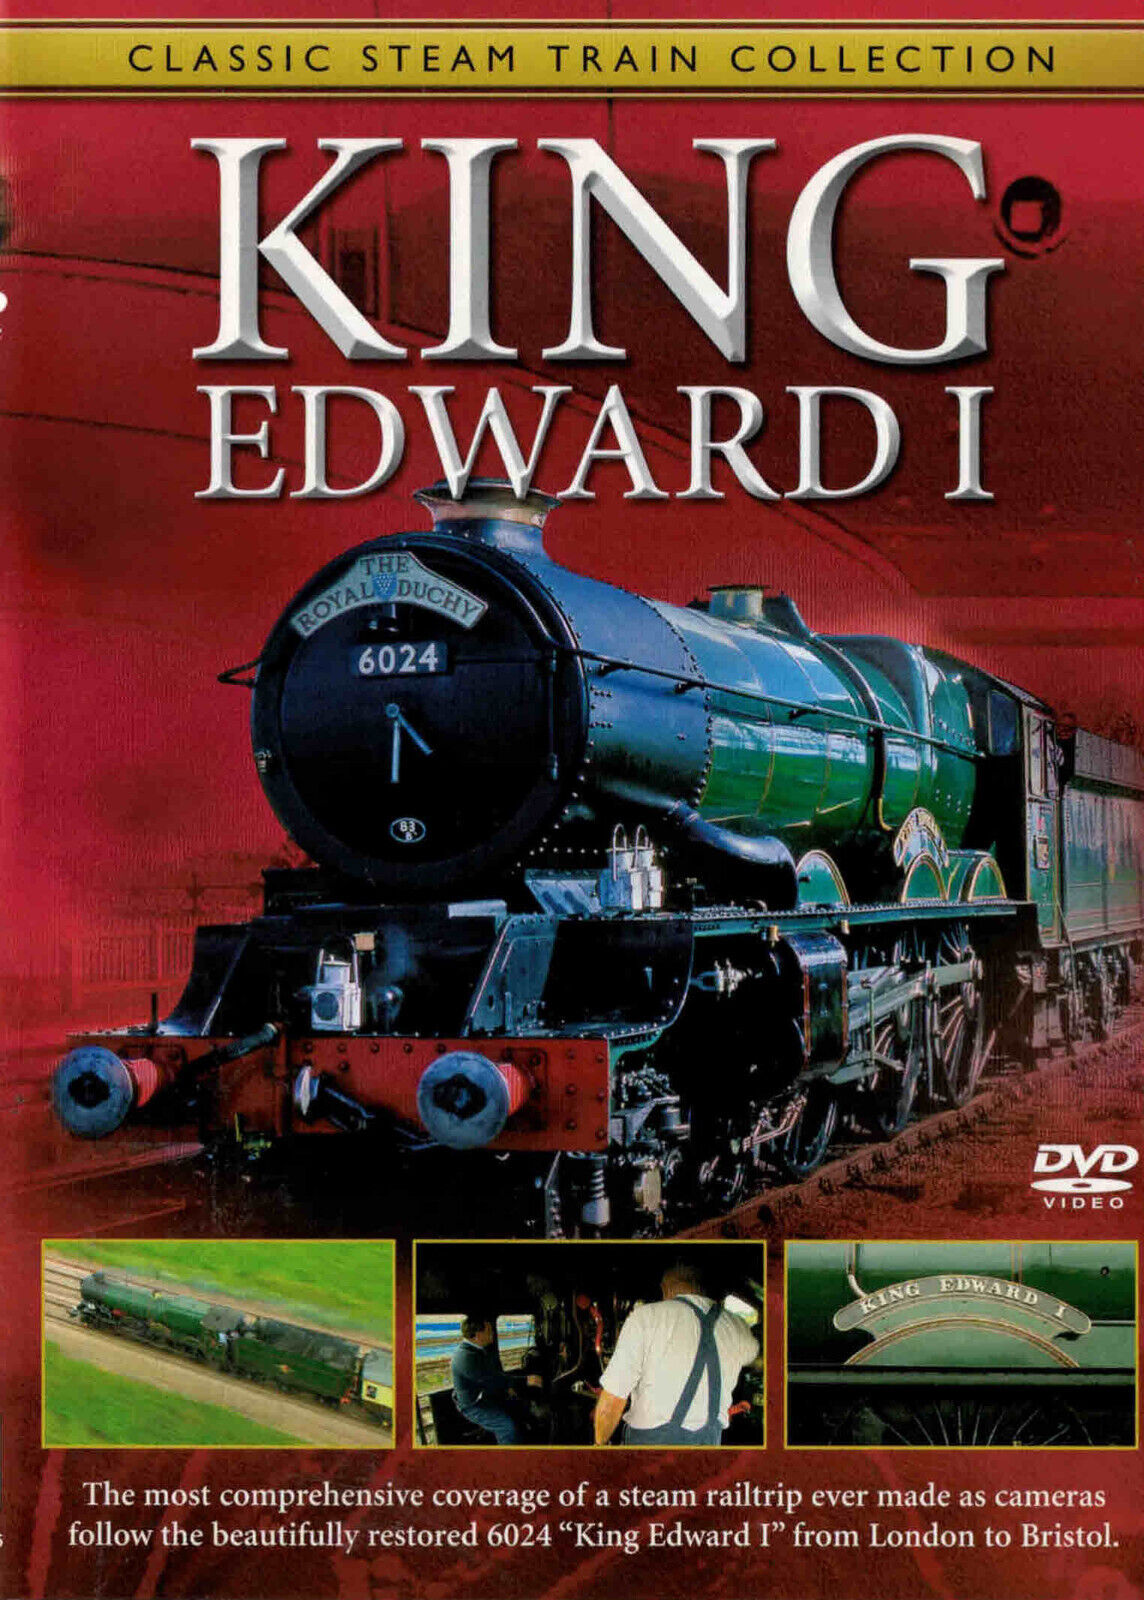 Classic Steam Train Collection - King Edward I - British Train DVD - Region Free